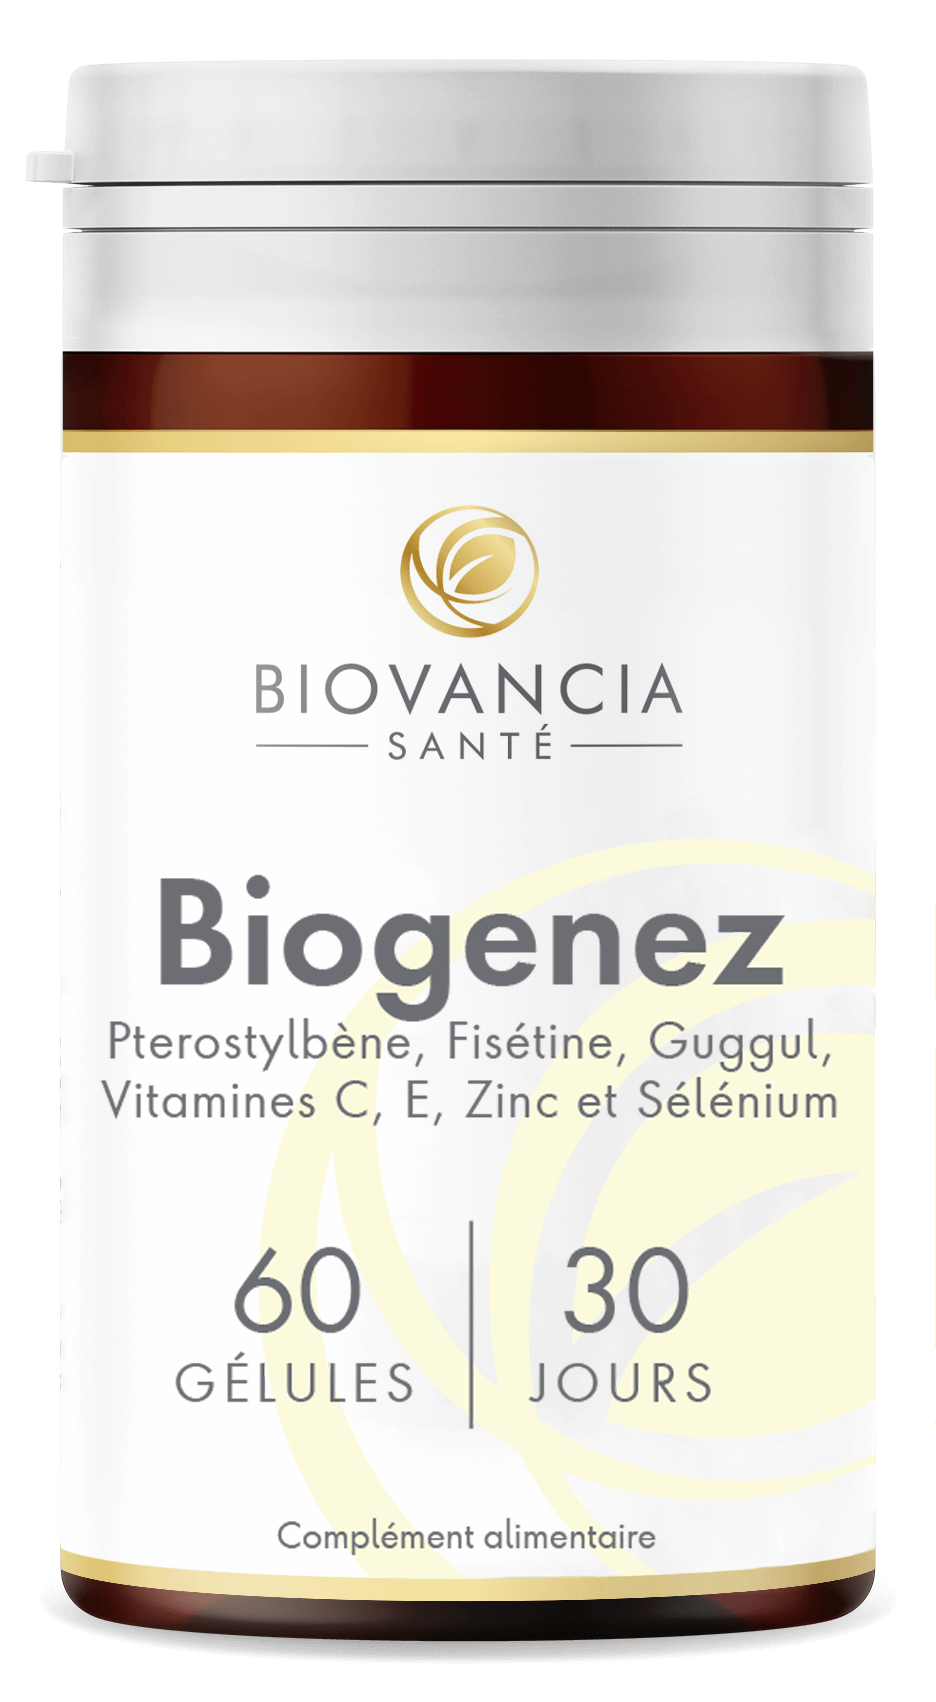 Biovancia Santé - BGZ Packshot Transparent